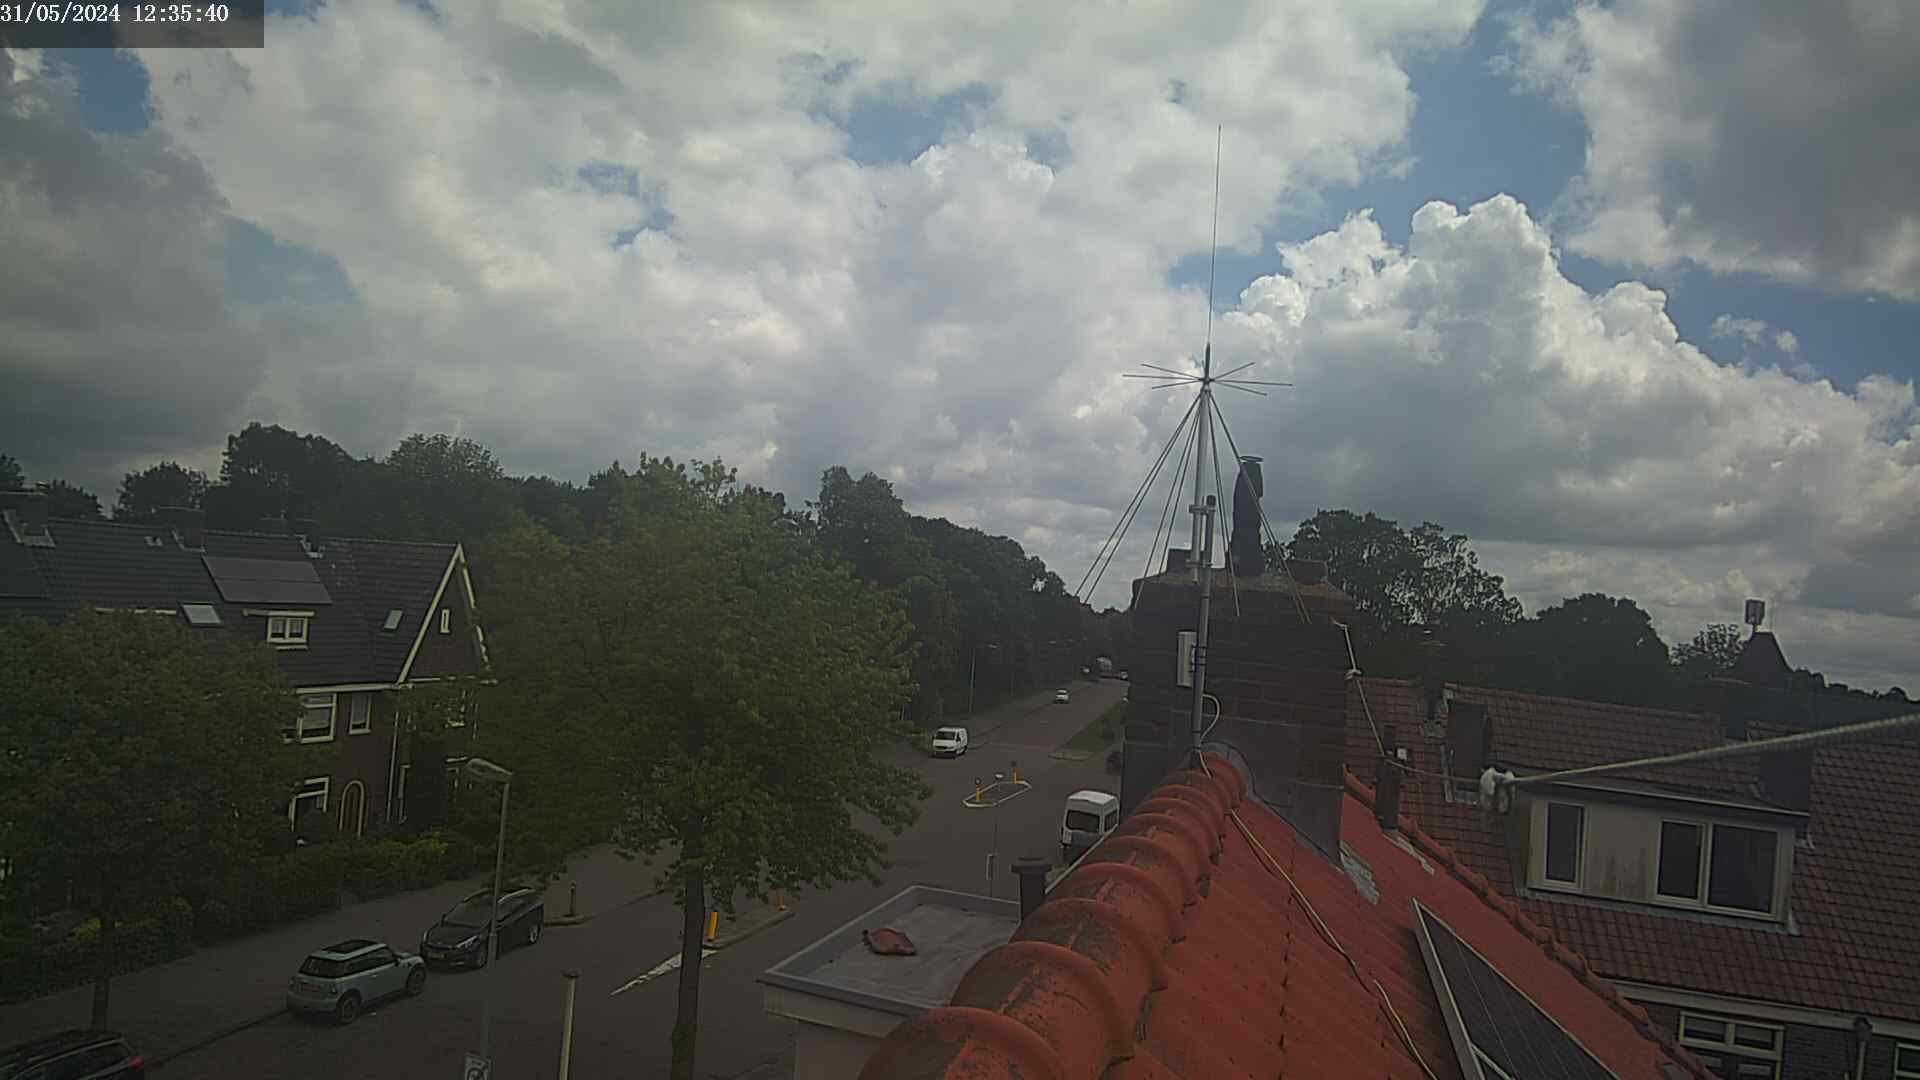 Haarlem Gio. 13:35